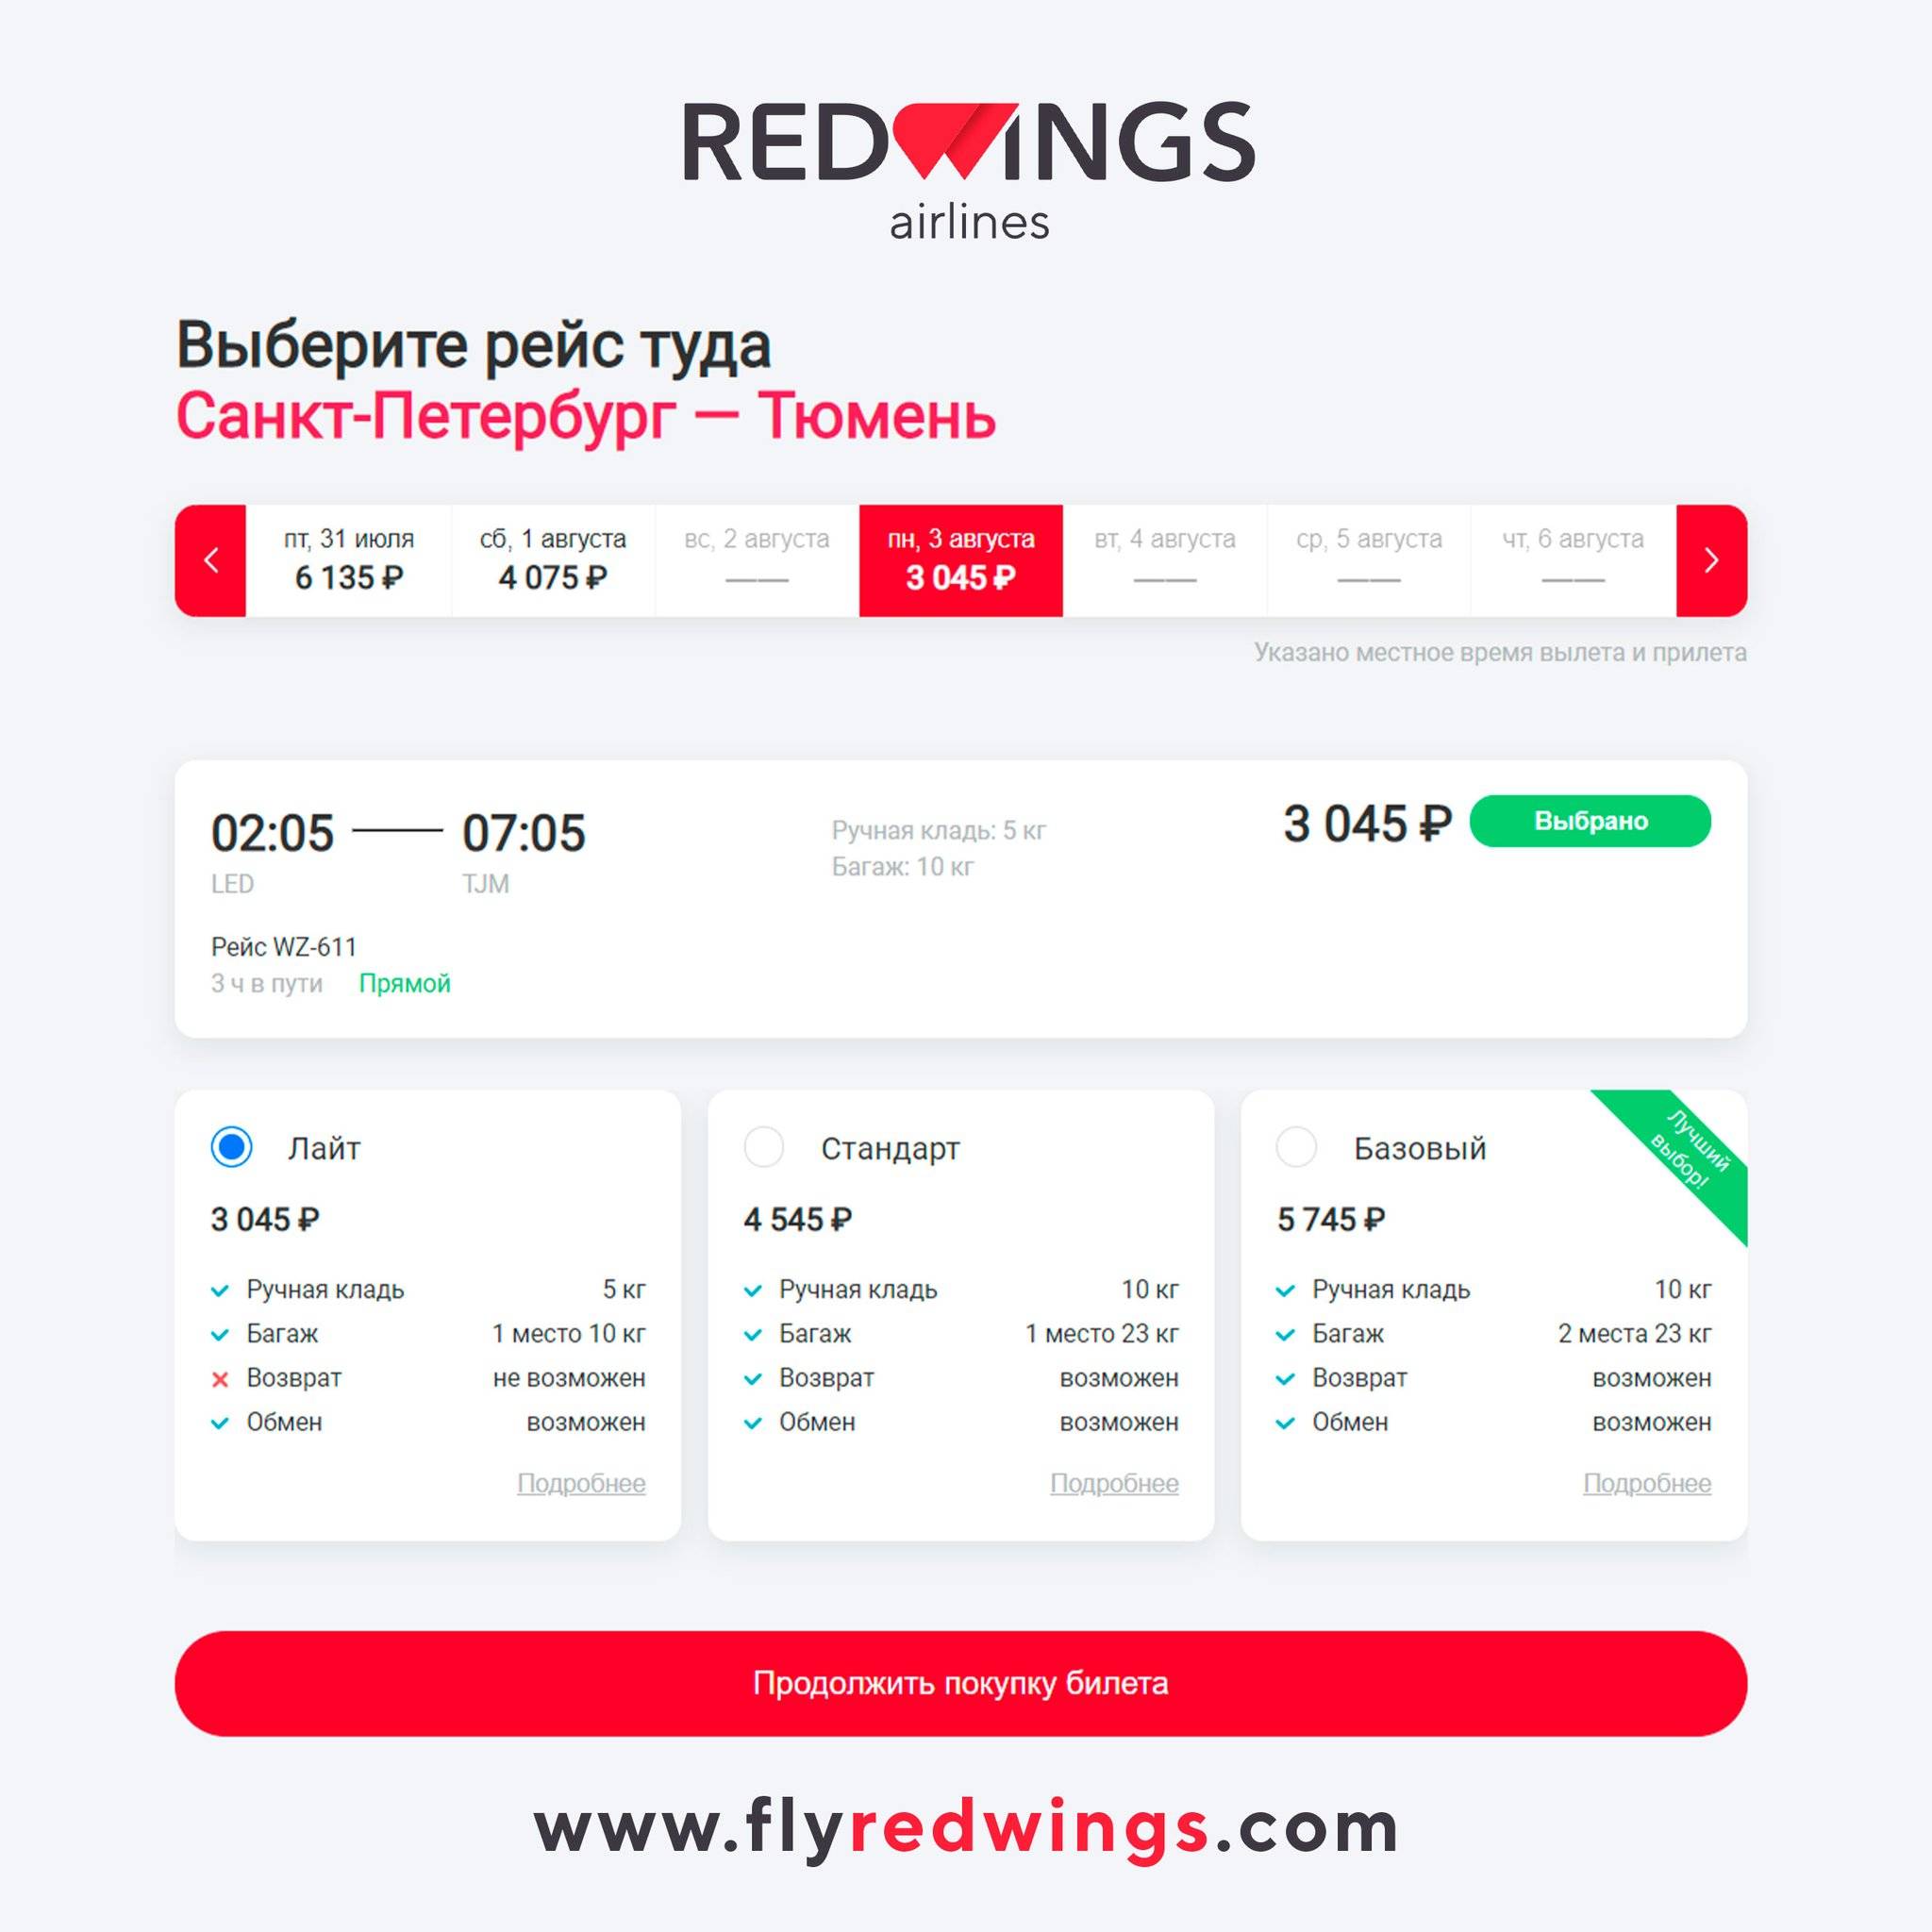 Регистрация на рейс red wings онлайн поэтапно